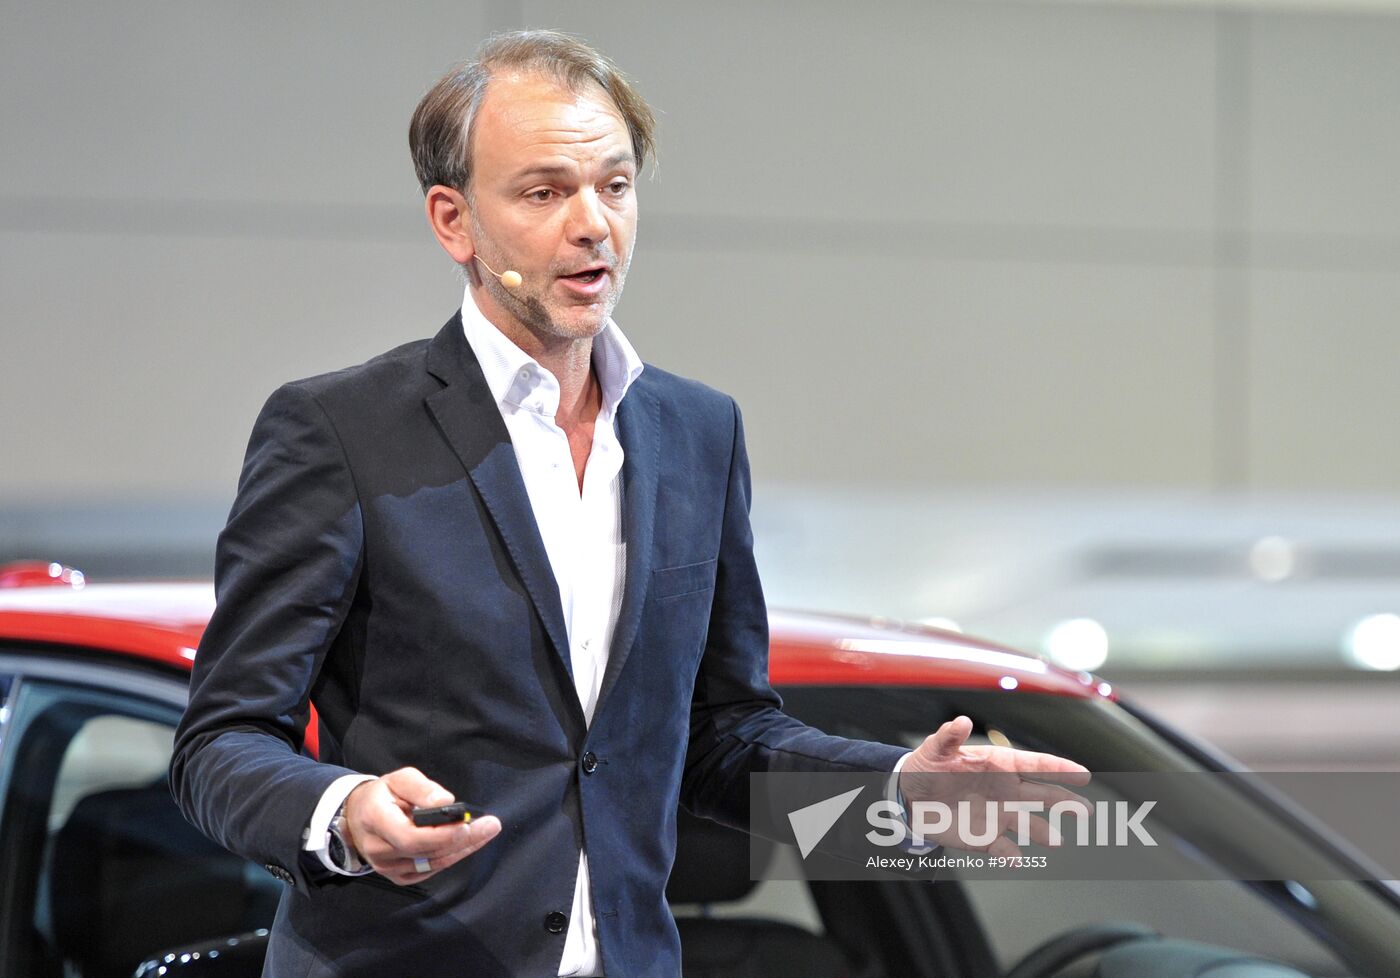 BMW concern presents new generation 3 Series sedan